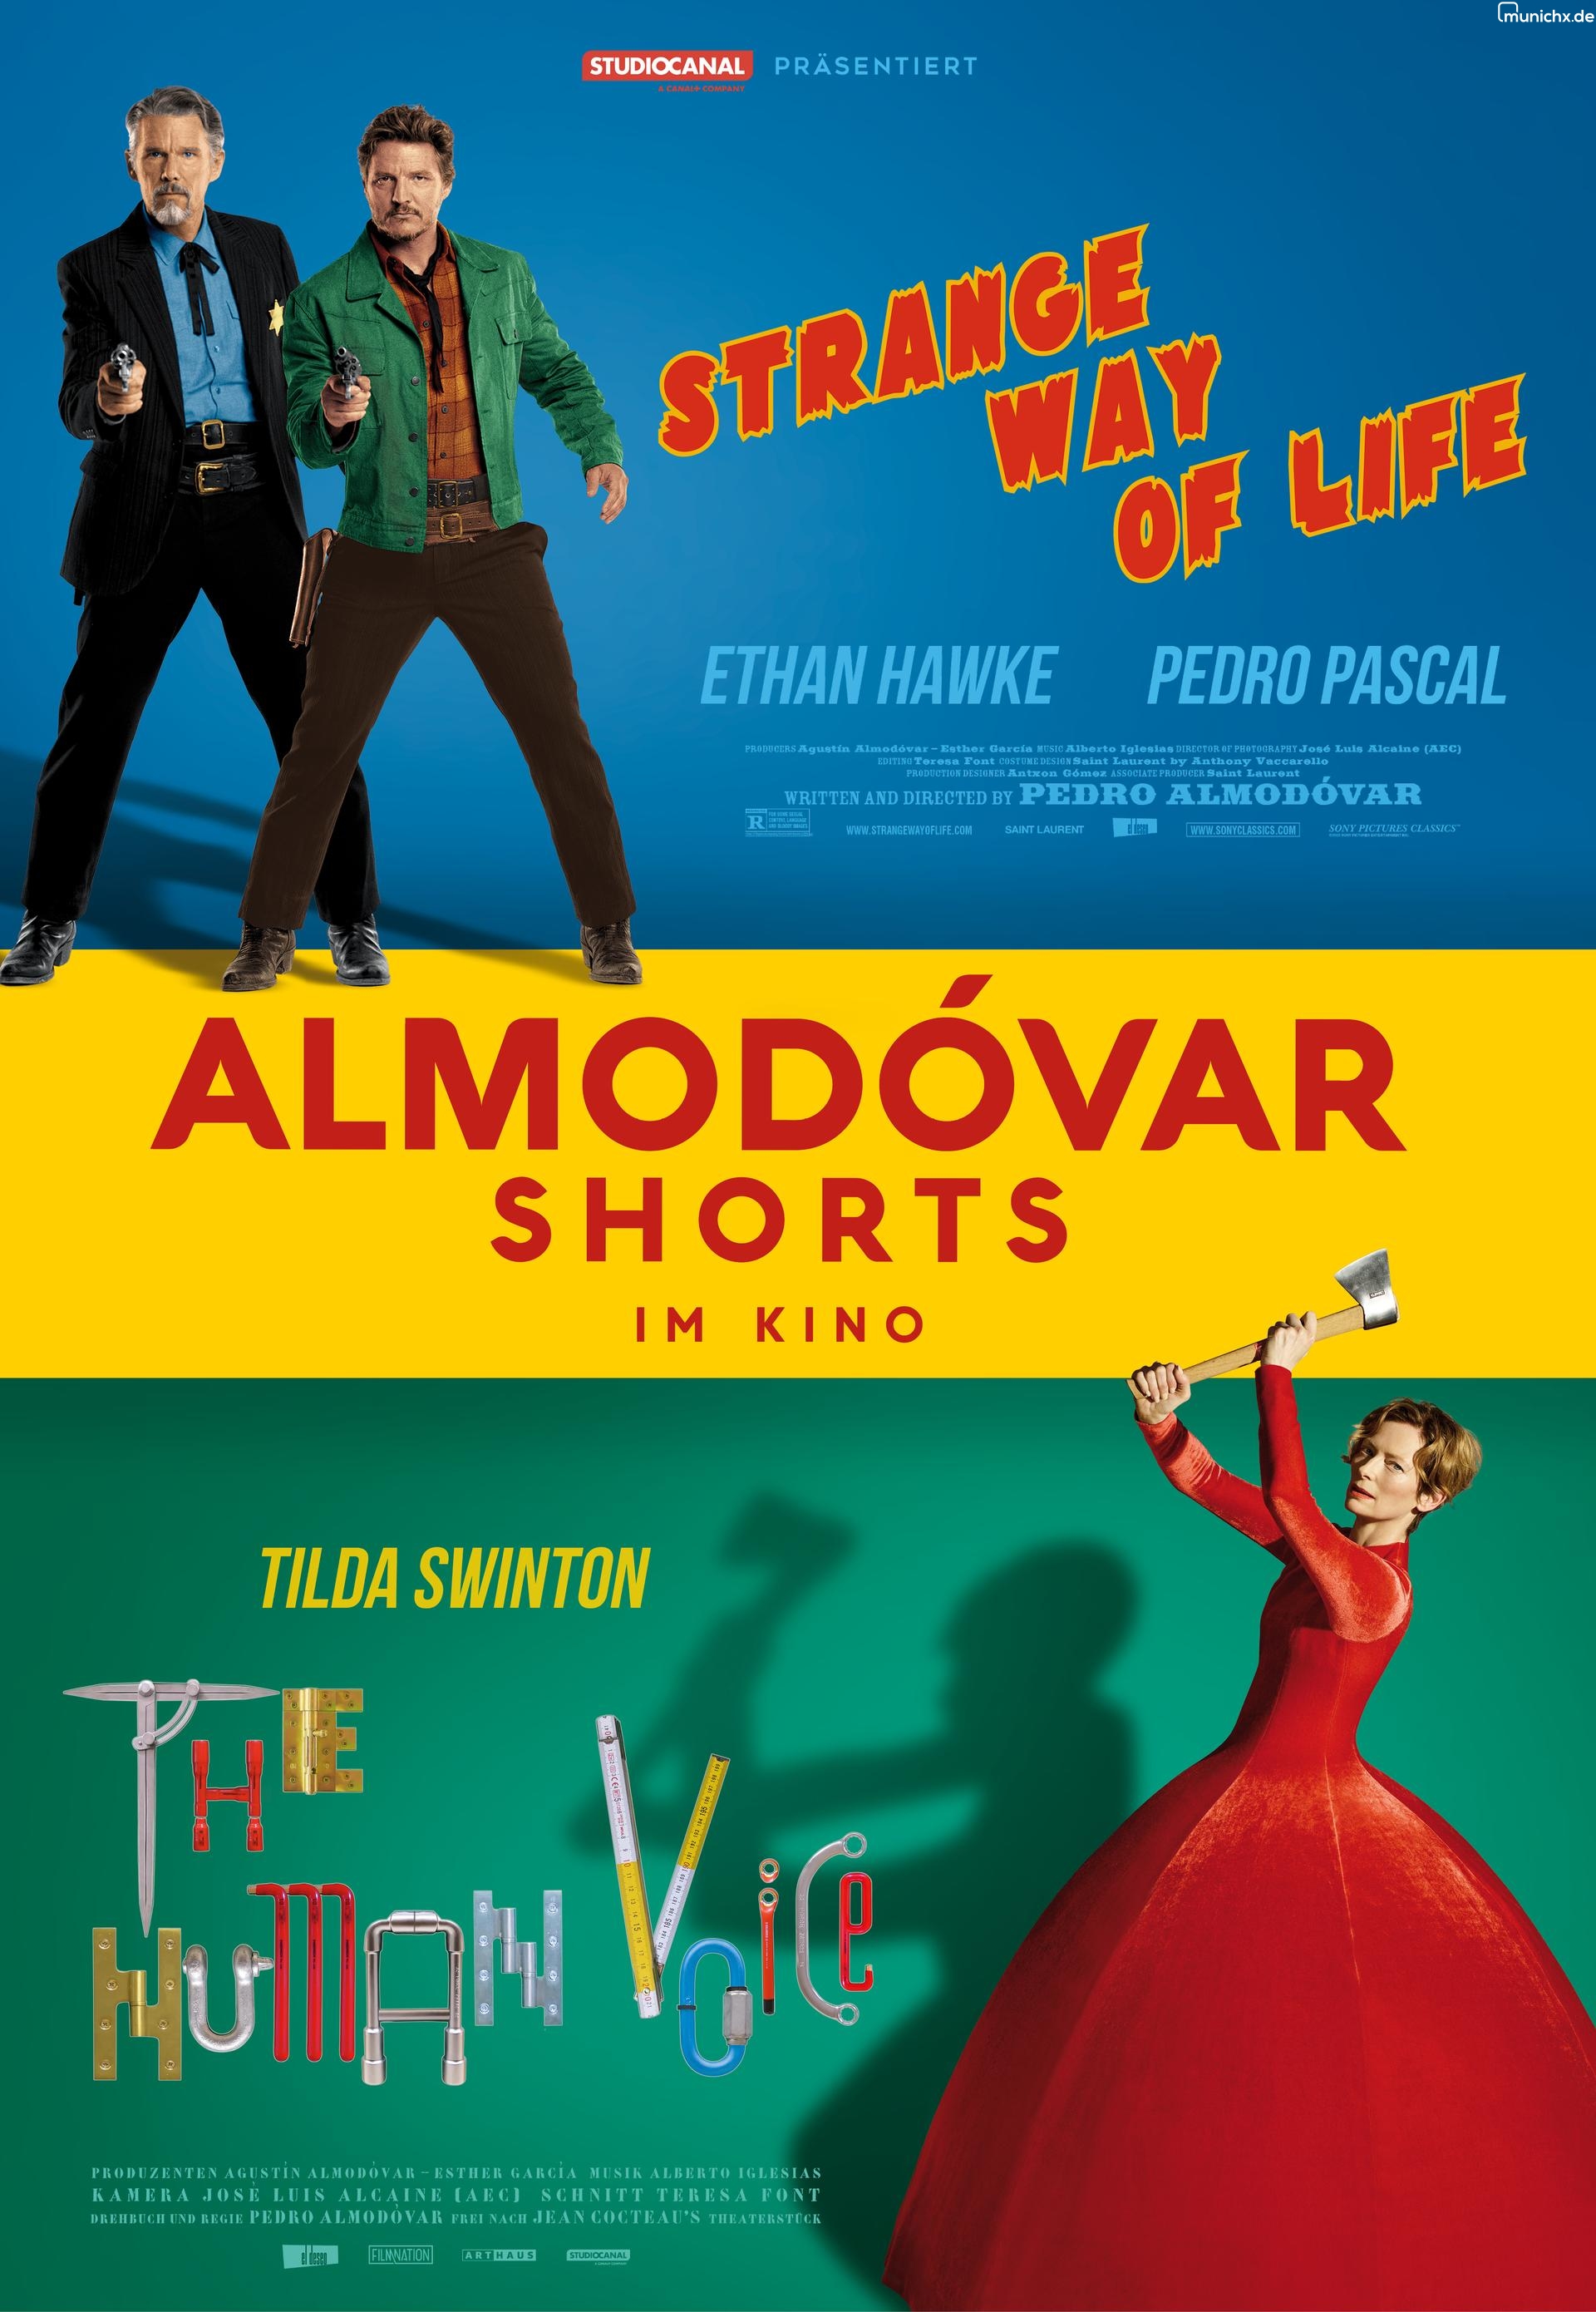 Almodóvar Shorts: Strange Way of Life (OV) & The Human Voice